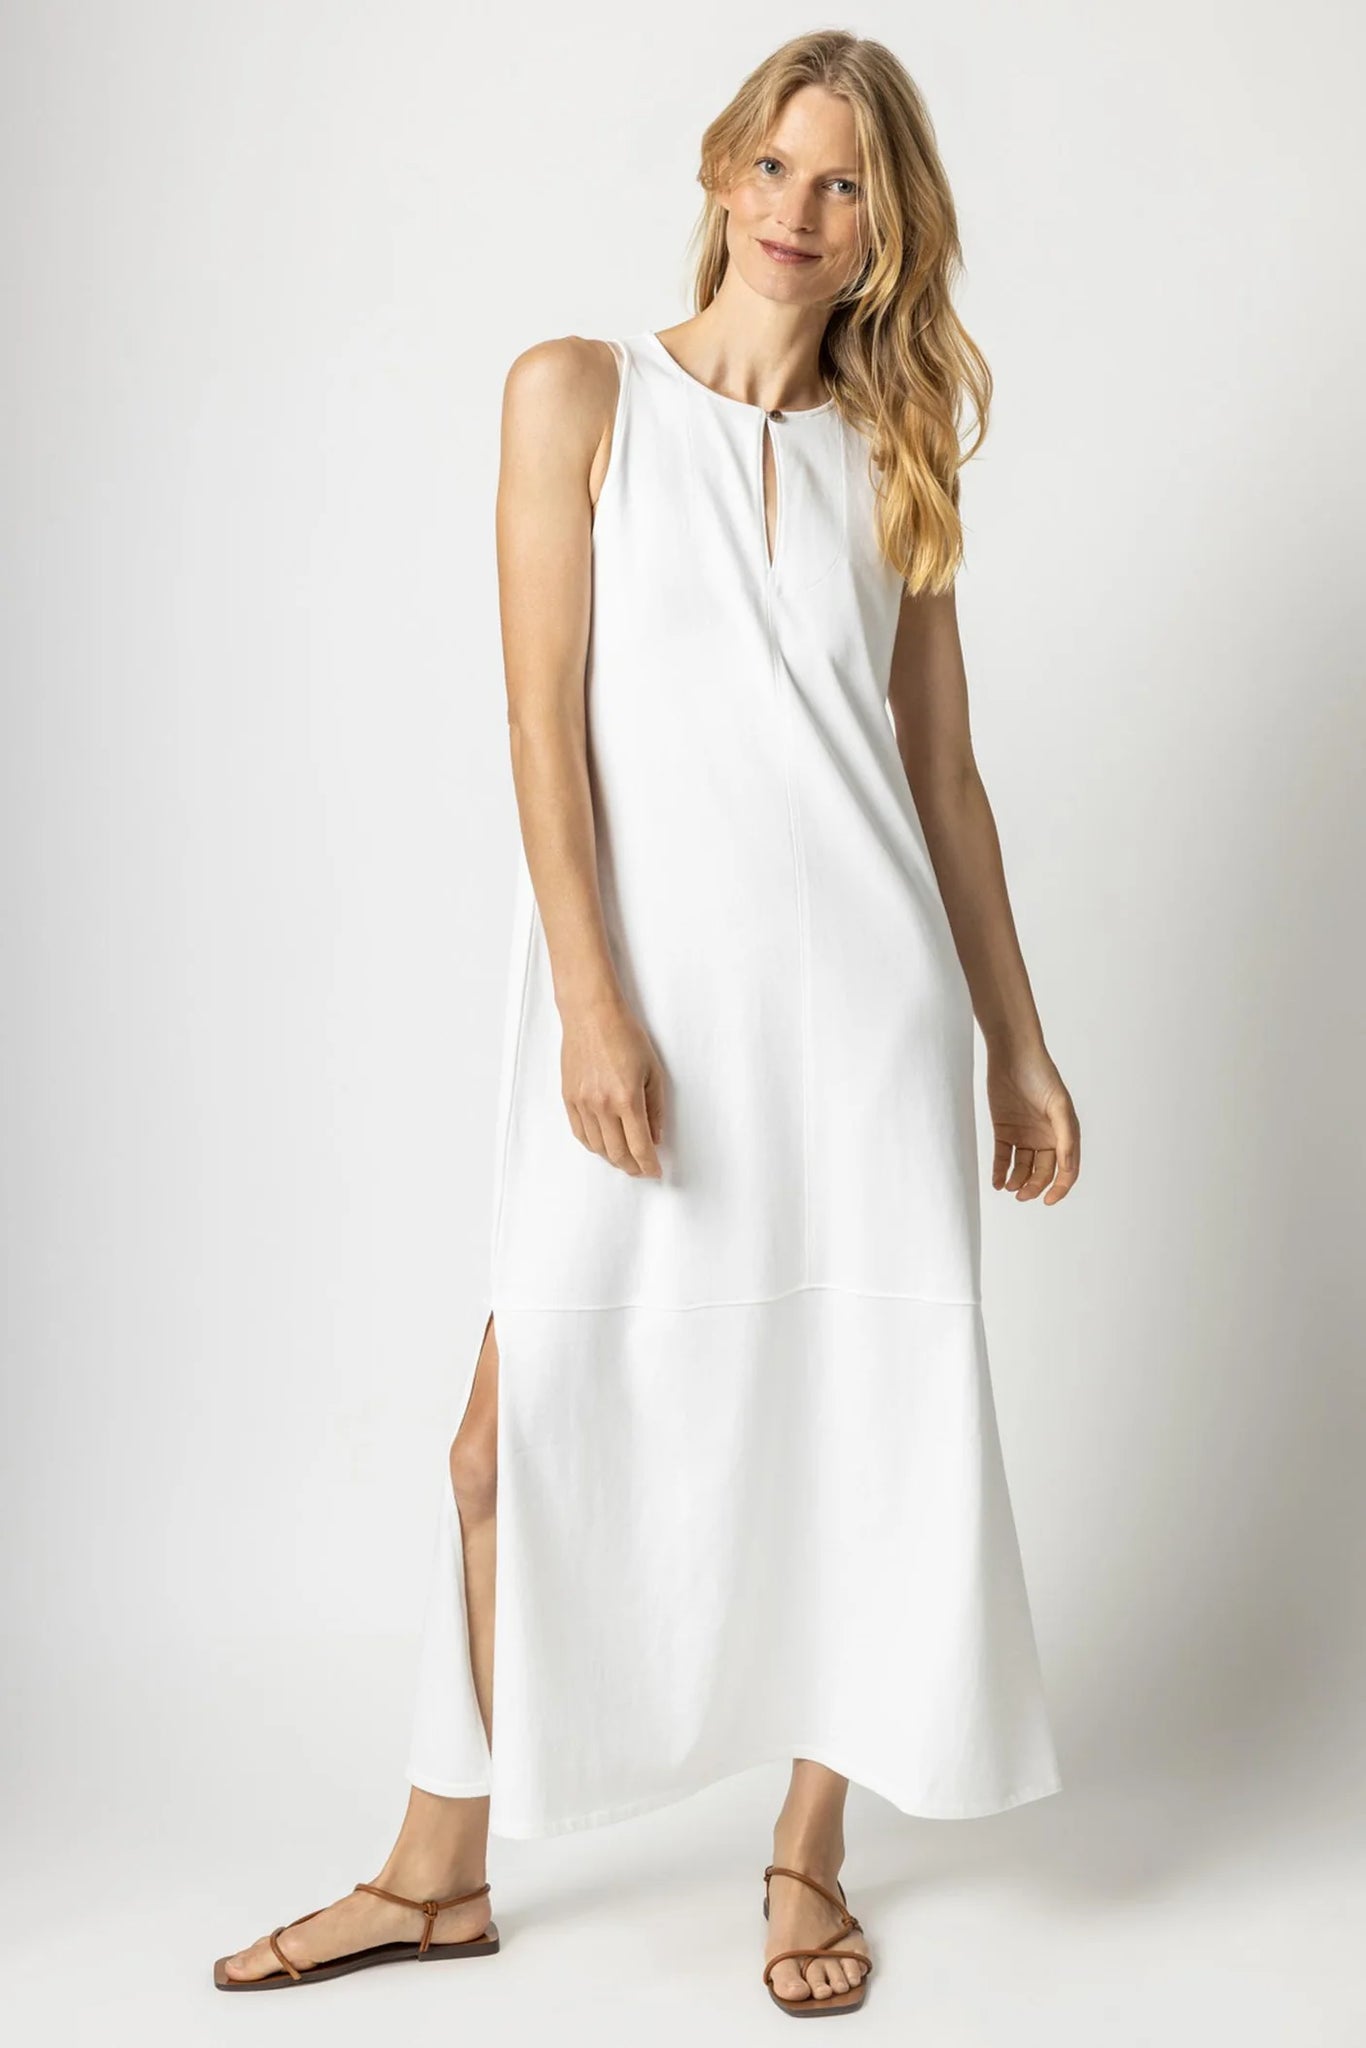 Lilla P Sleeveless Keyhole Maxi Dress- White